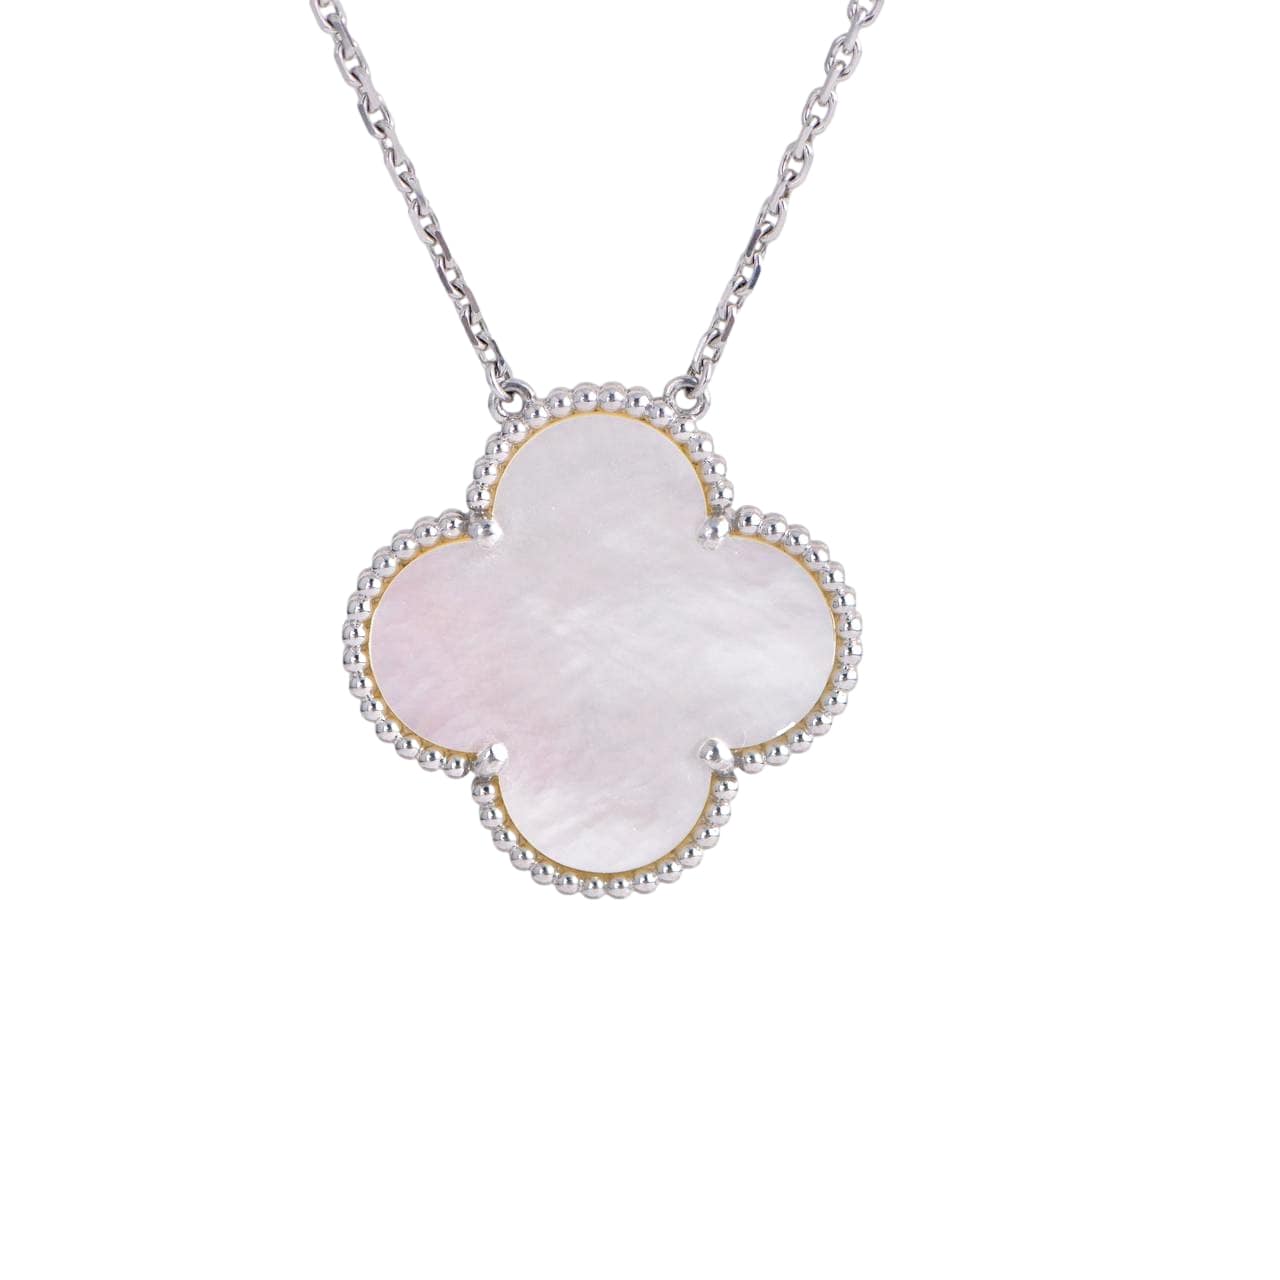 Magic van cleef replica white gold necklace gray mother-of-pearl white  mother-of-pearl : vancleef-jewelry